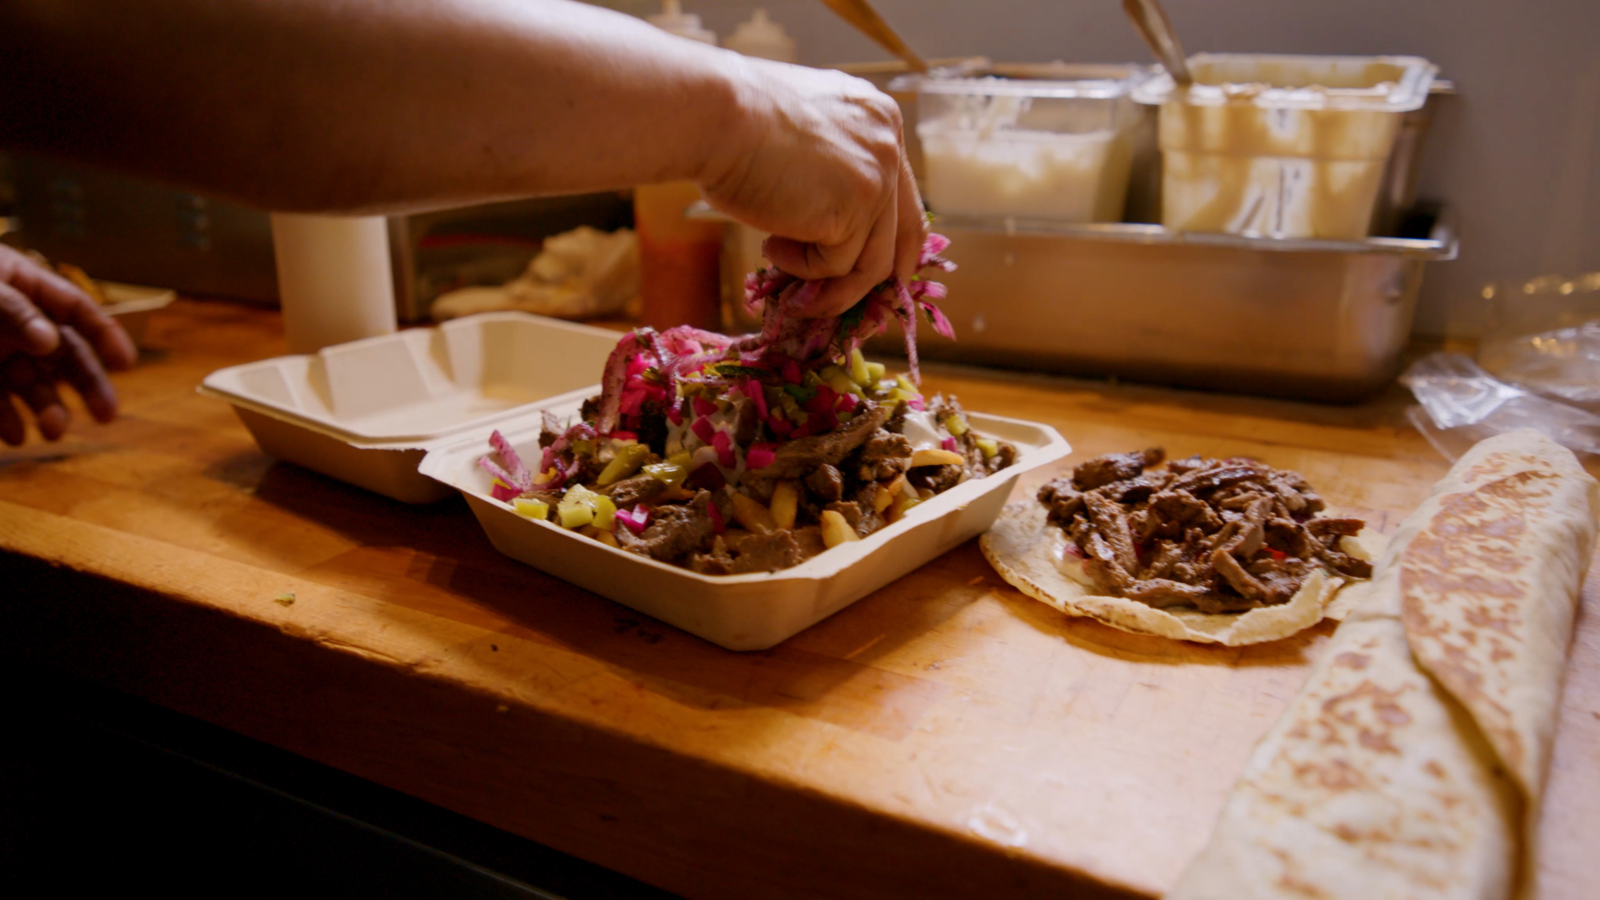 Shawarmaji restaurant brings Arab cuisine, hospitality to Downtown Oakland [Video]